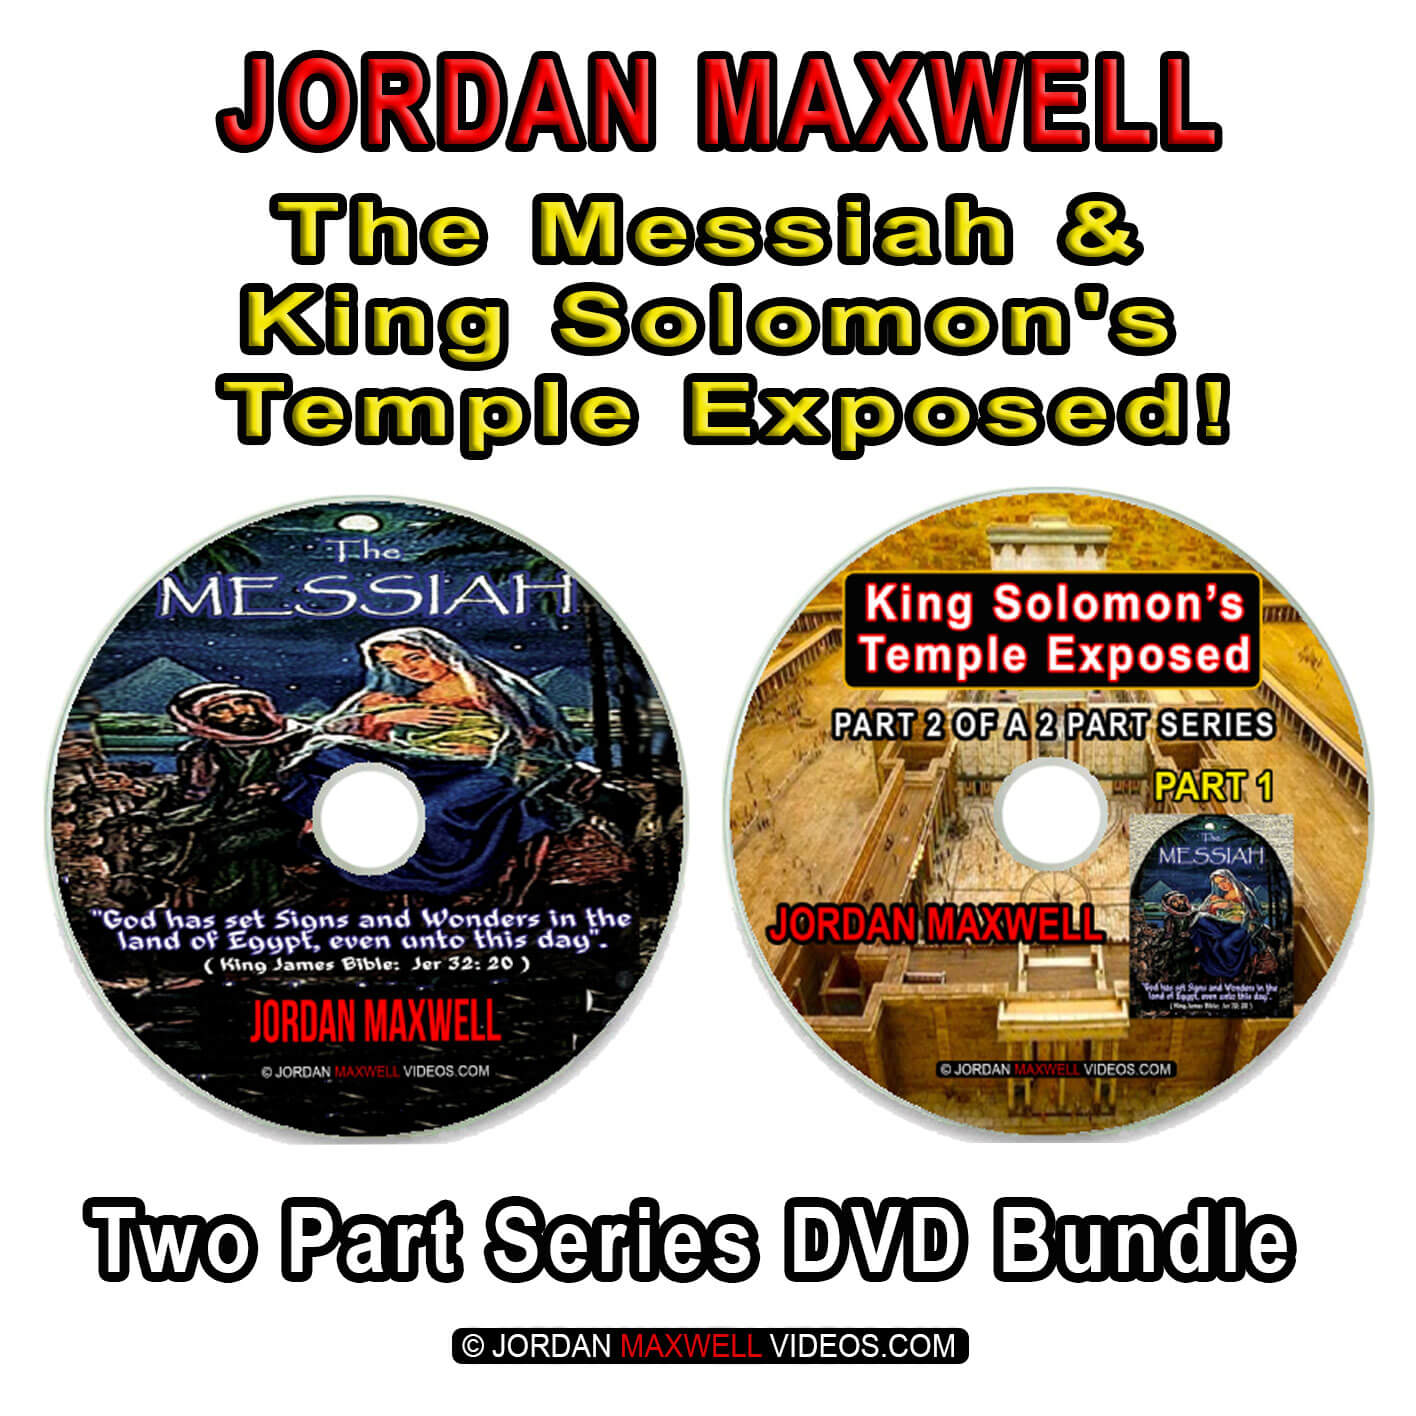 Jordan Maxwell - The Messiah & King Solomon's Temple Exposed - DVD